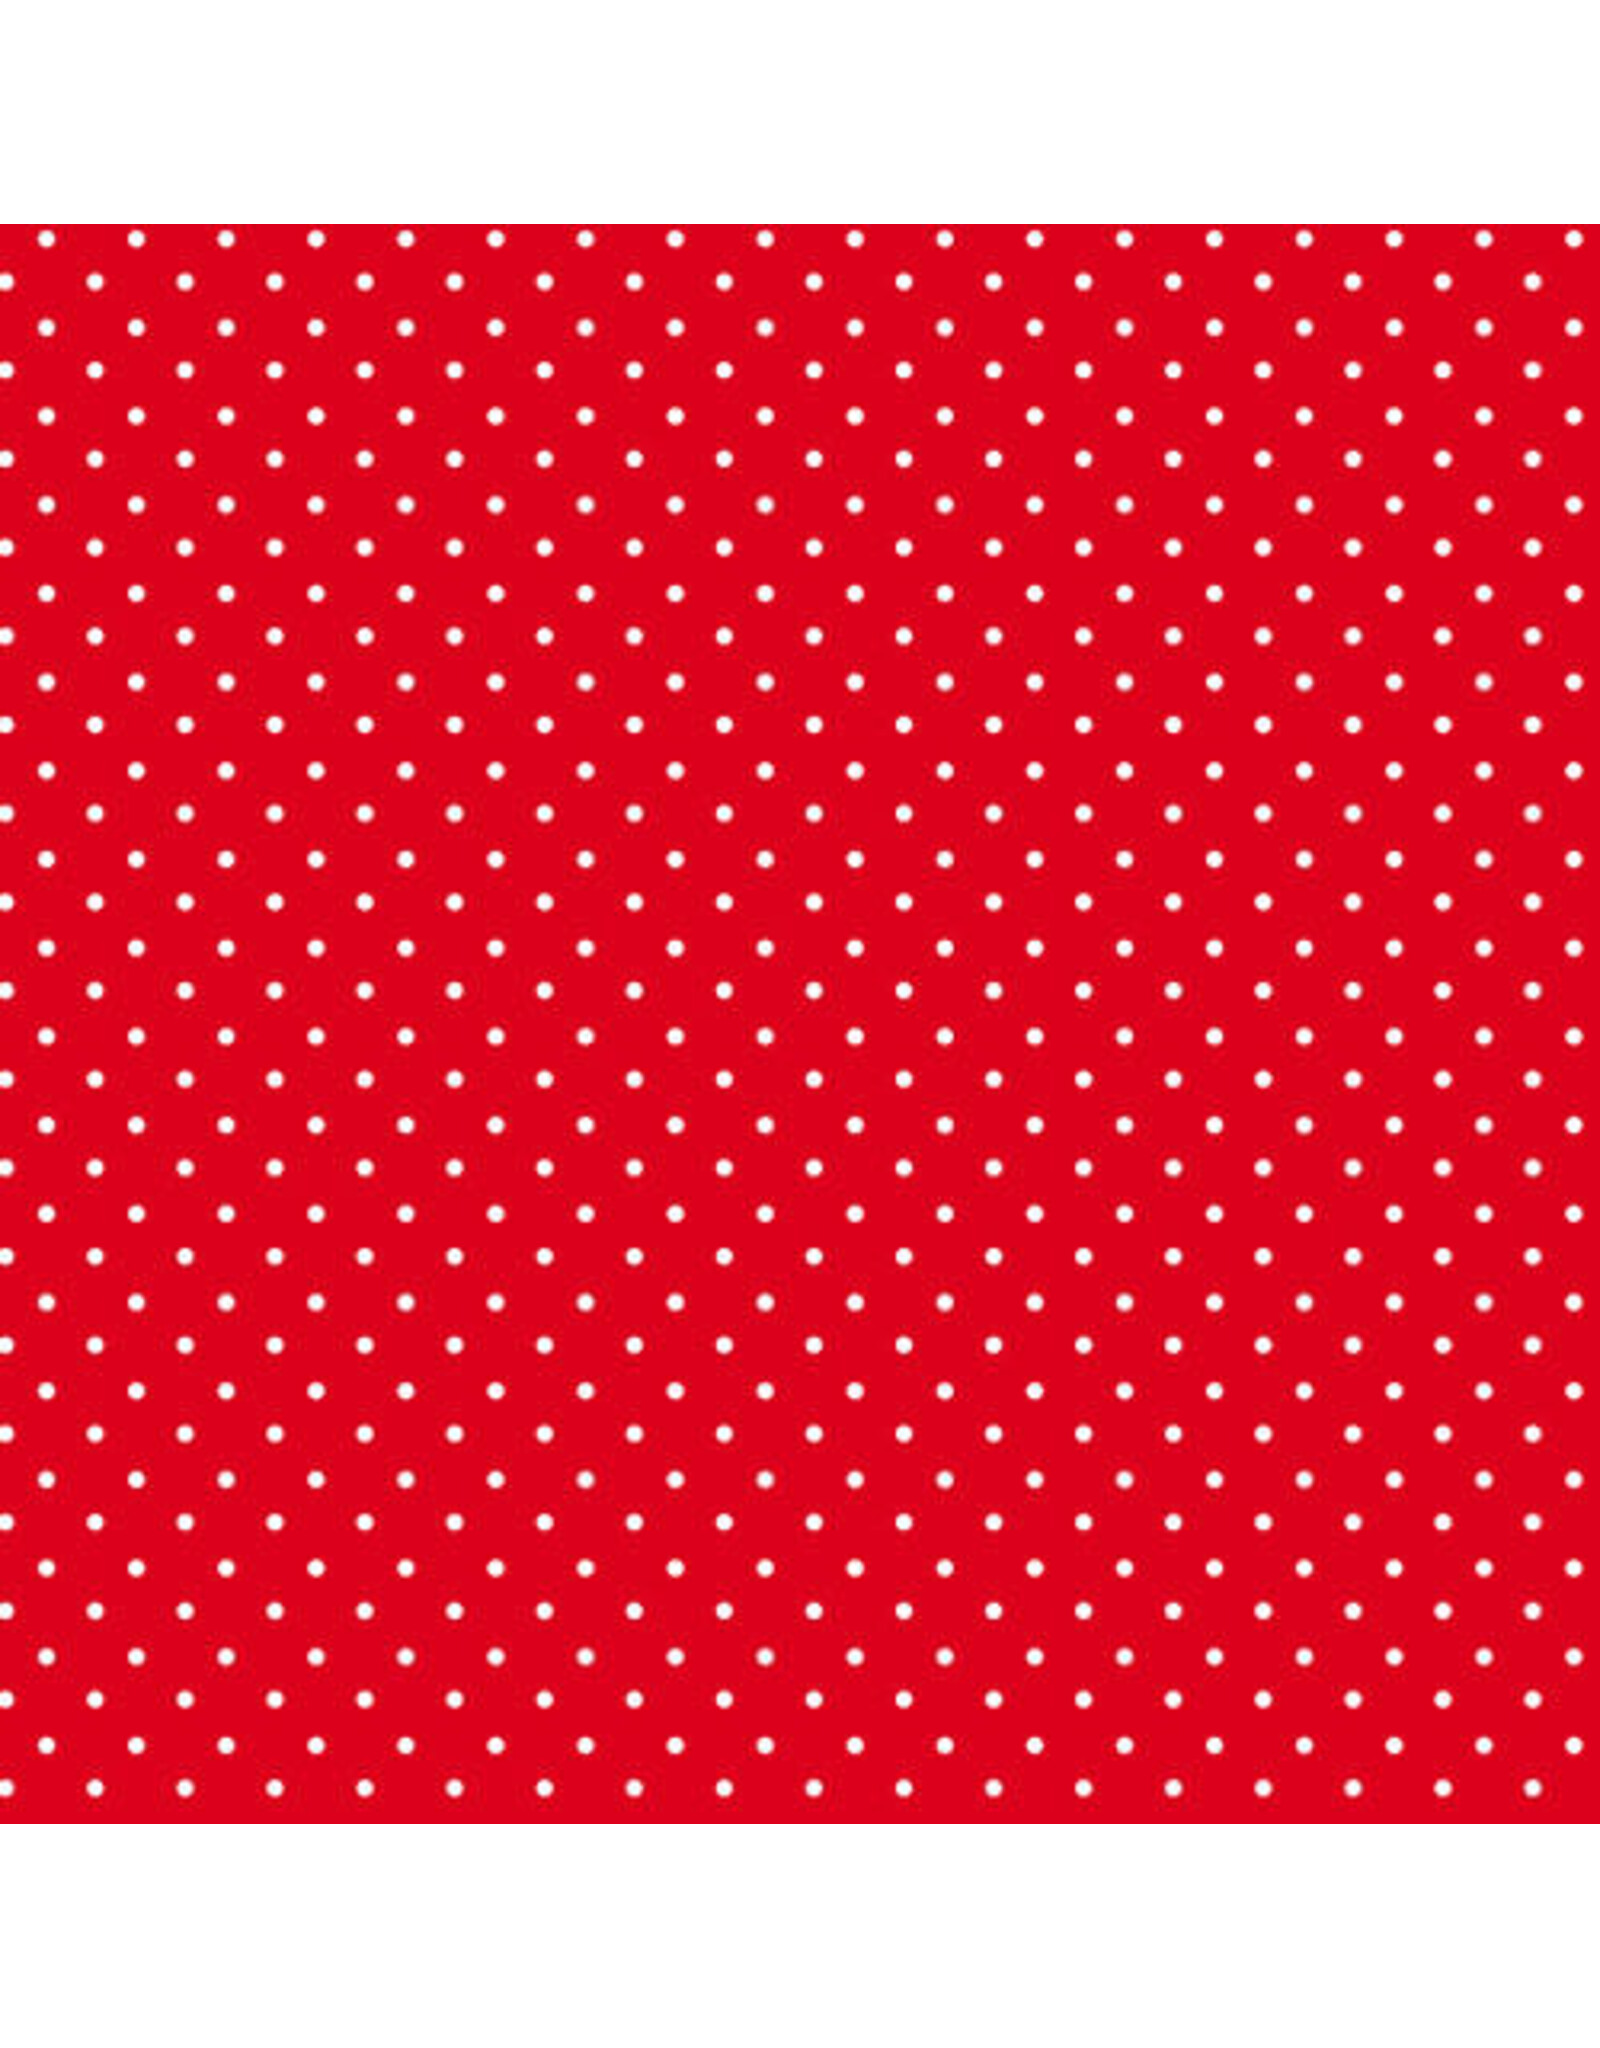 Henry Glass Priscilla's Polkas - White Dots on Red - Q-1030-88